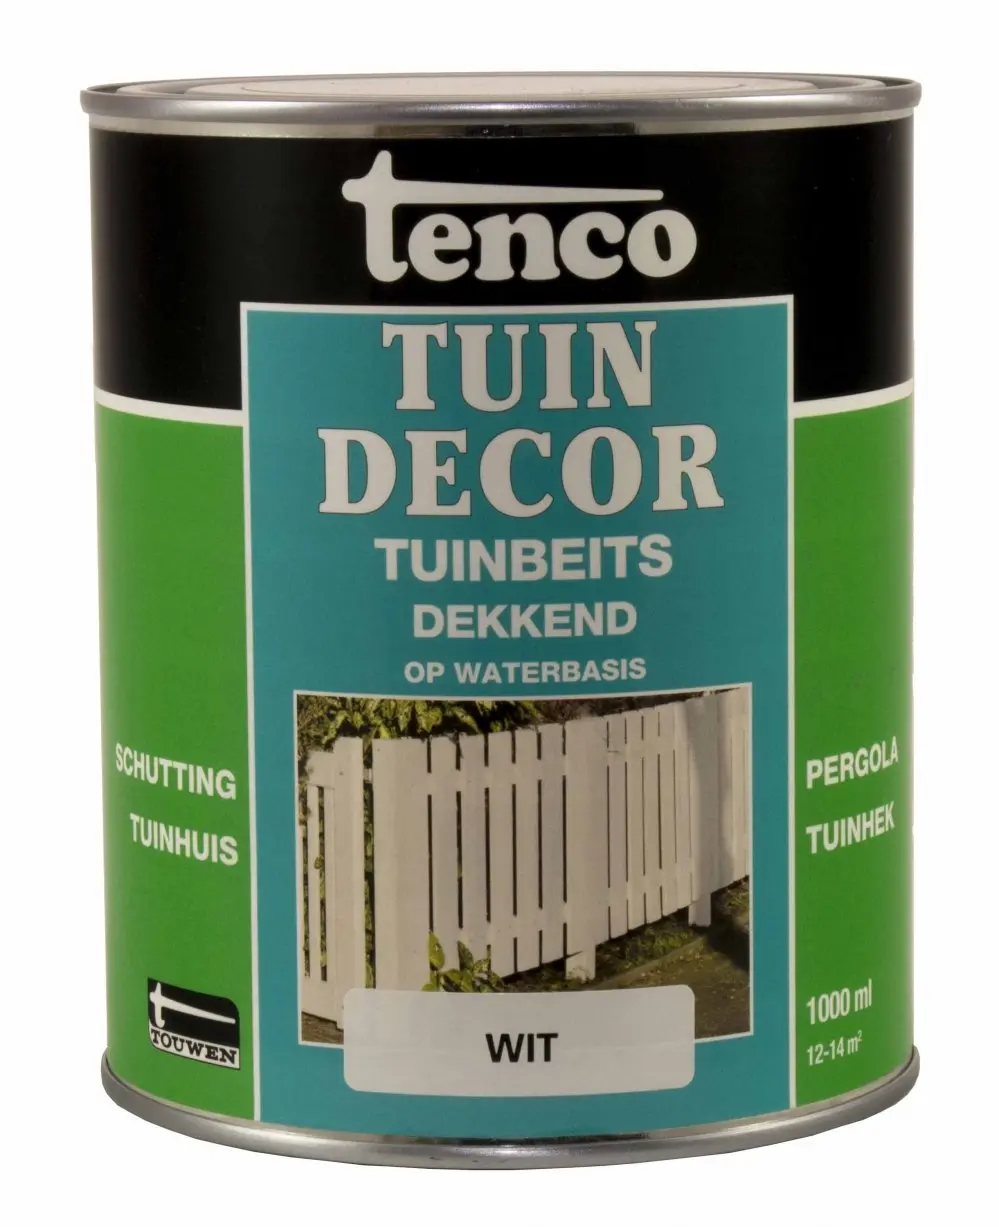 Tenco-tuindeocr-dekkend-1ltr-verfcompleet.nl